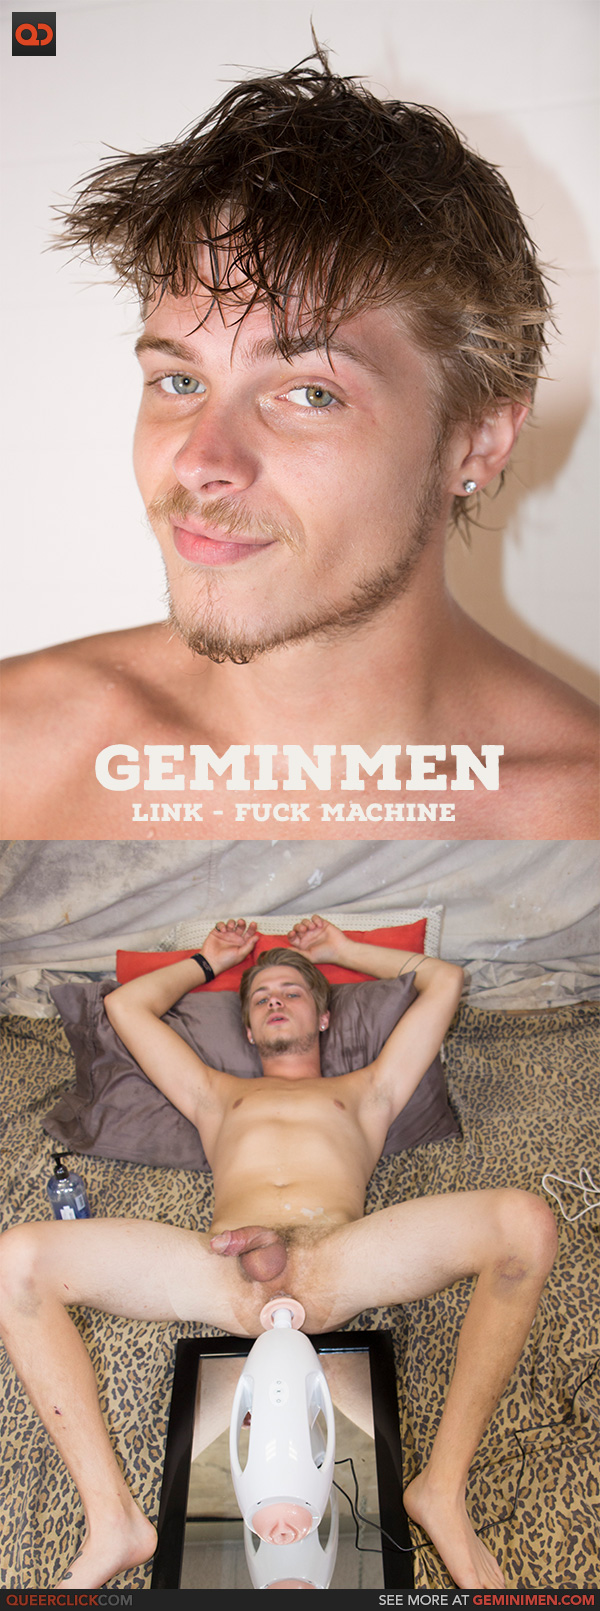 Geminimen Gay Porn - Gemini Men: Link - Fuck Machine - QueerClick